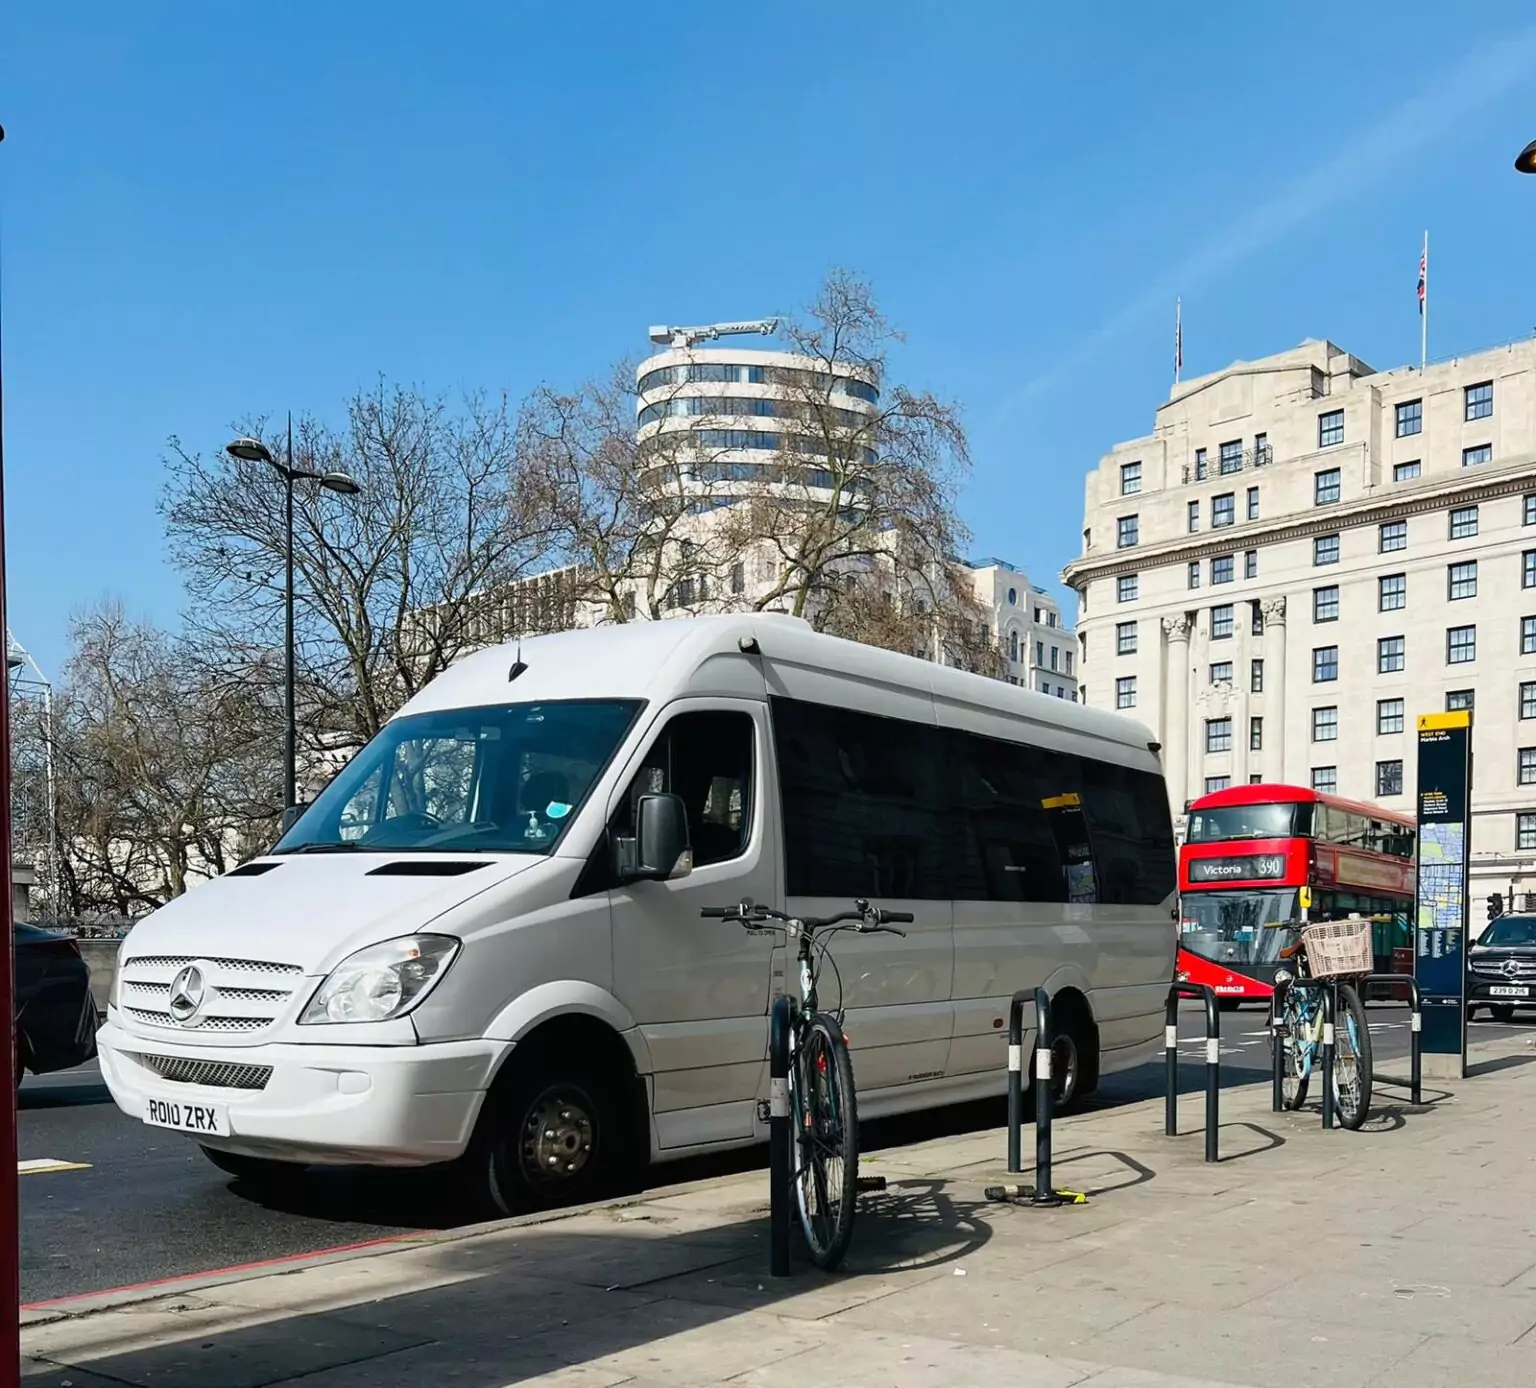 SLS Minibus Hire: Your Premier Choice for Minibus Hire in London